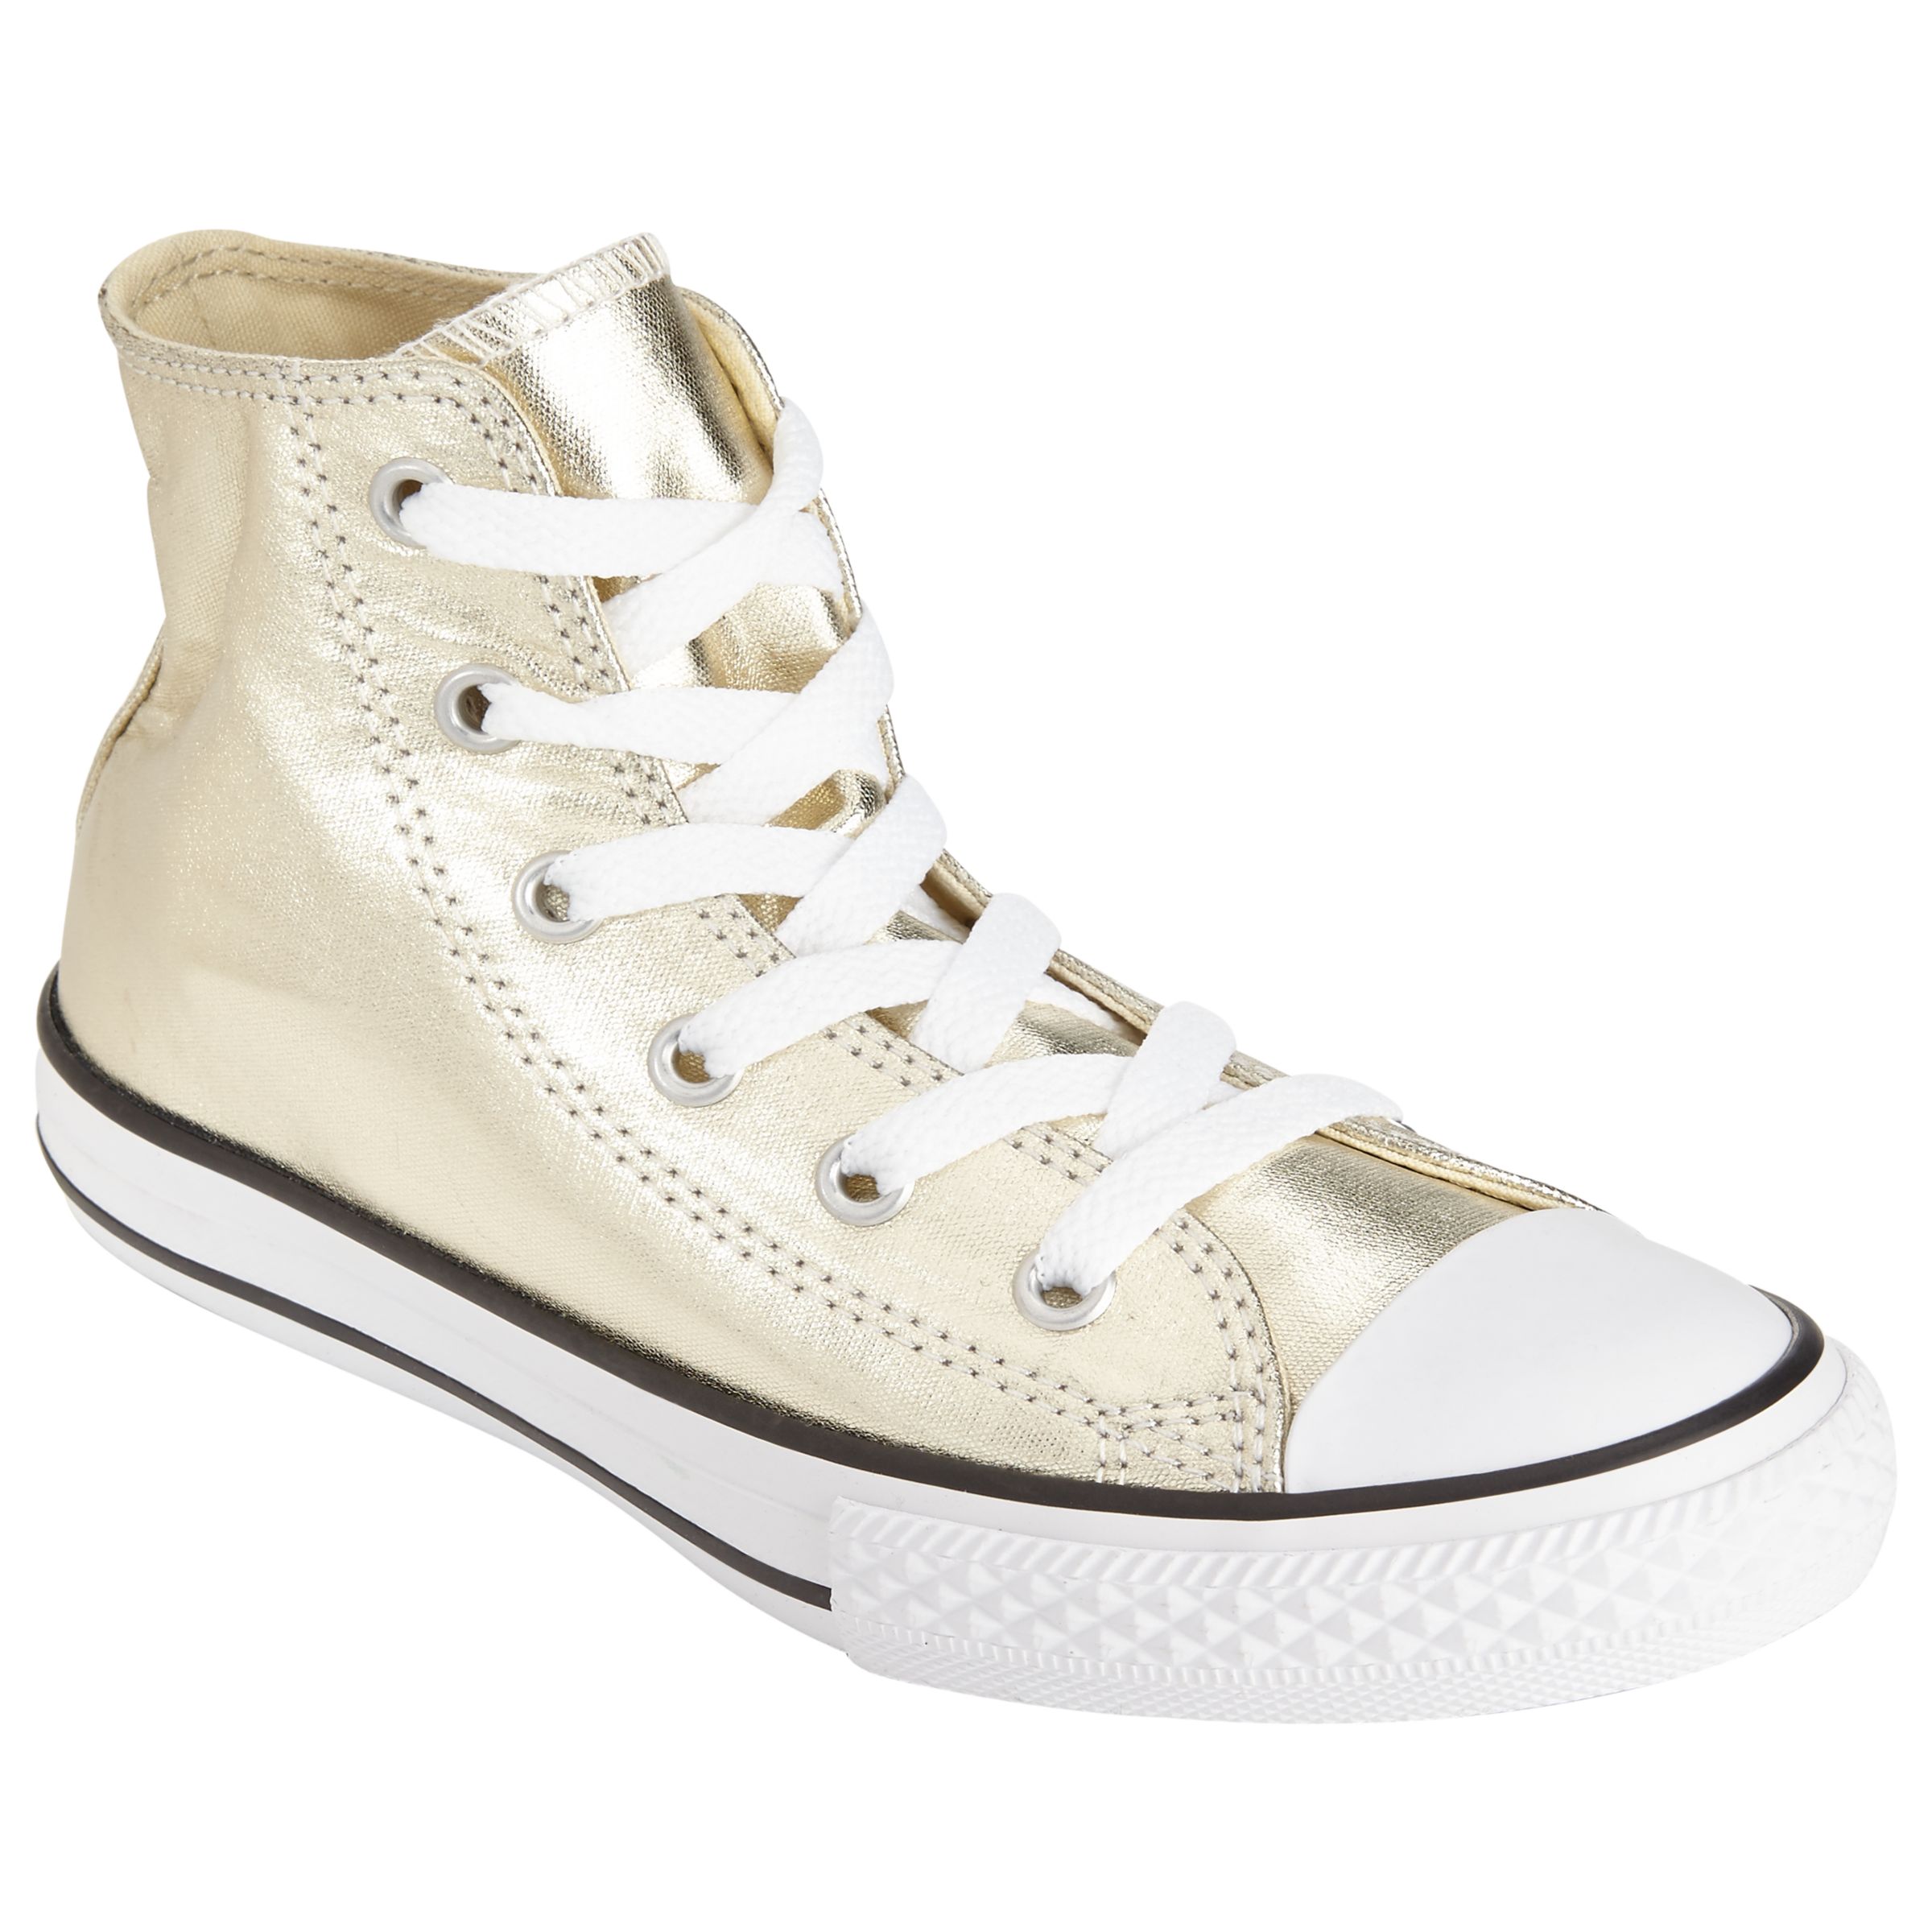 Converse Children's Hi Top Chuck Taylor Metallic Shoes, Light Gold, 2